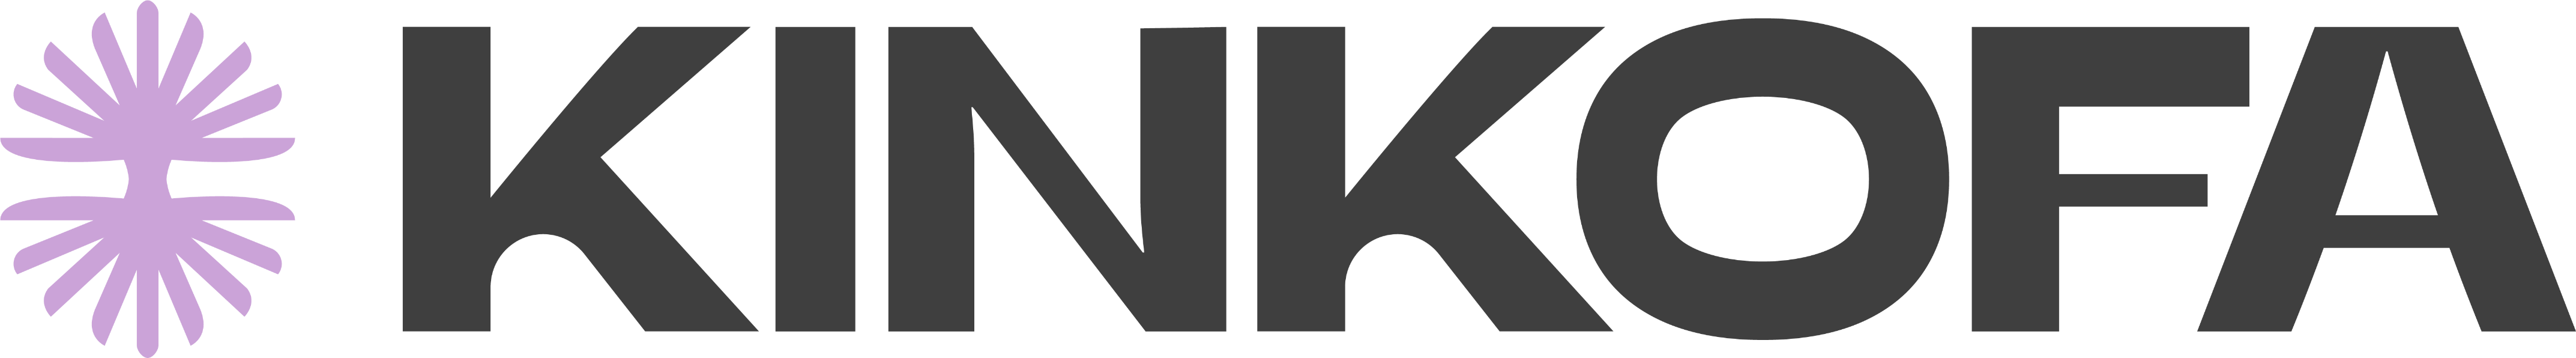 Kinkofa logo fullcolor (1)